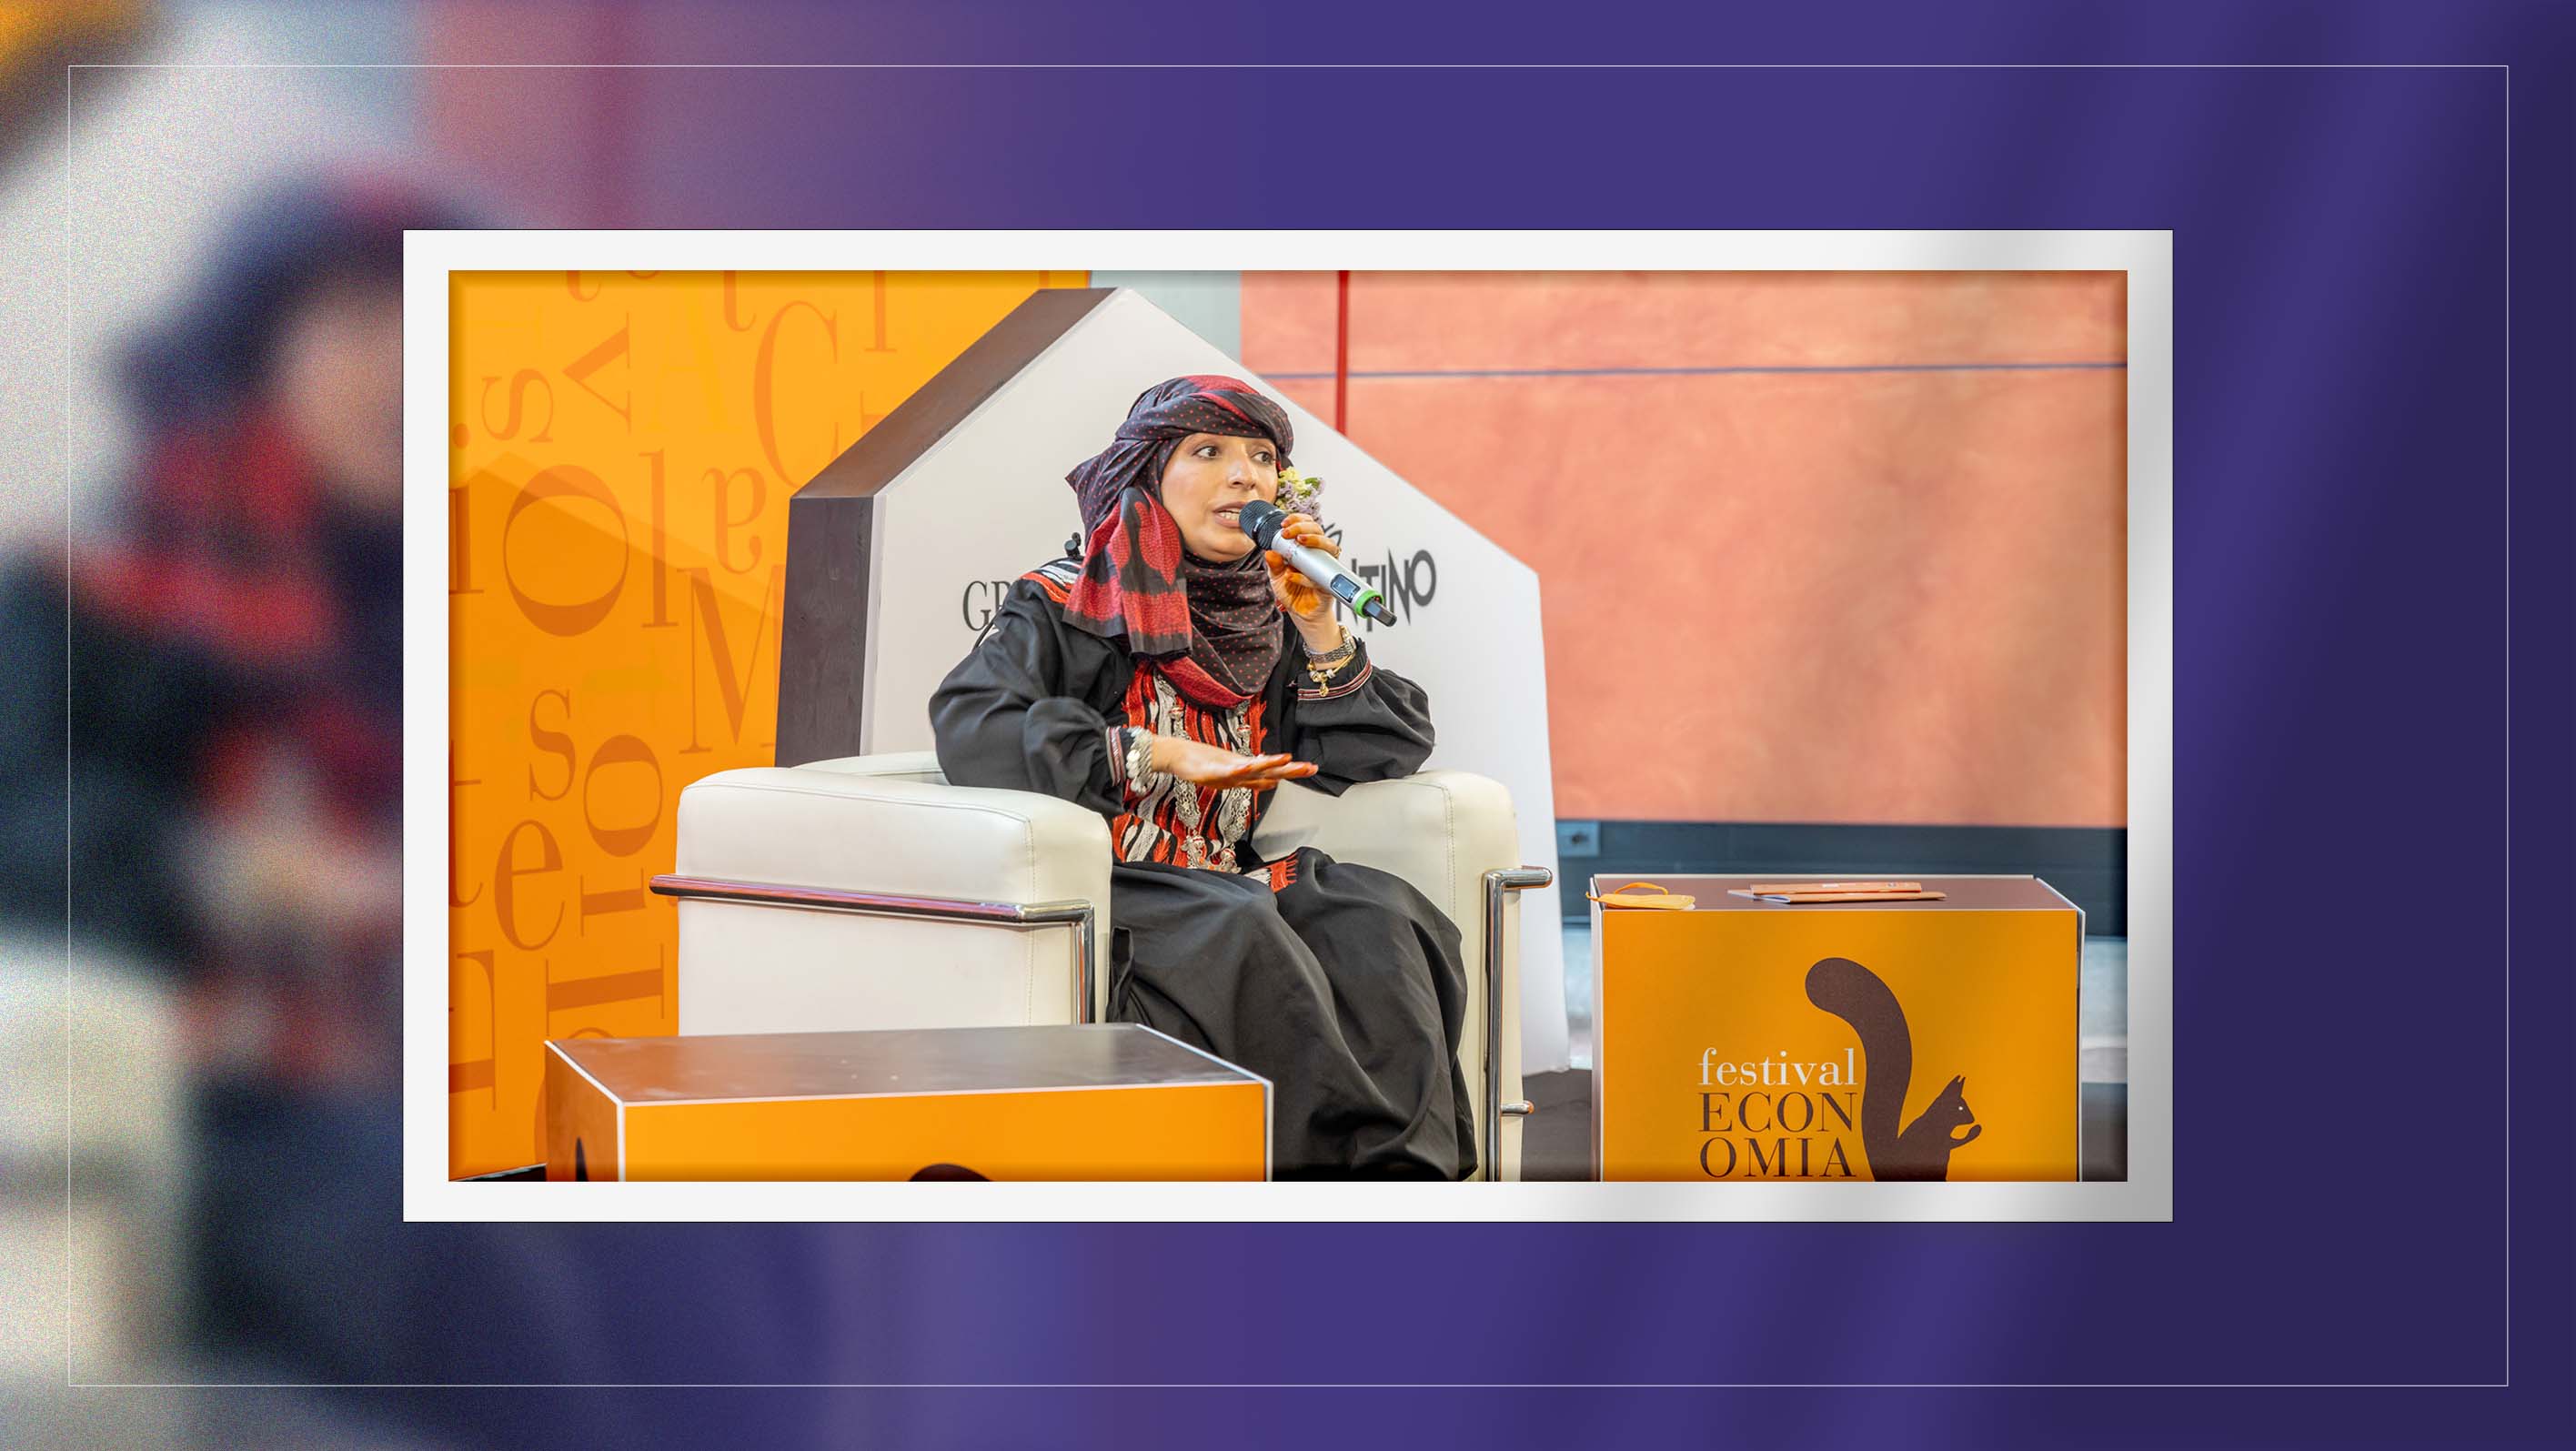 Tawakkol Karman to participate in Trento Economic Festival 